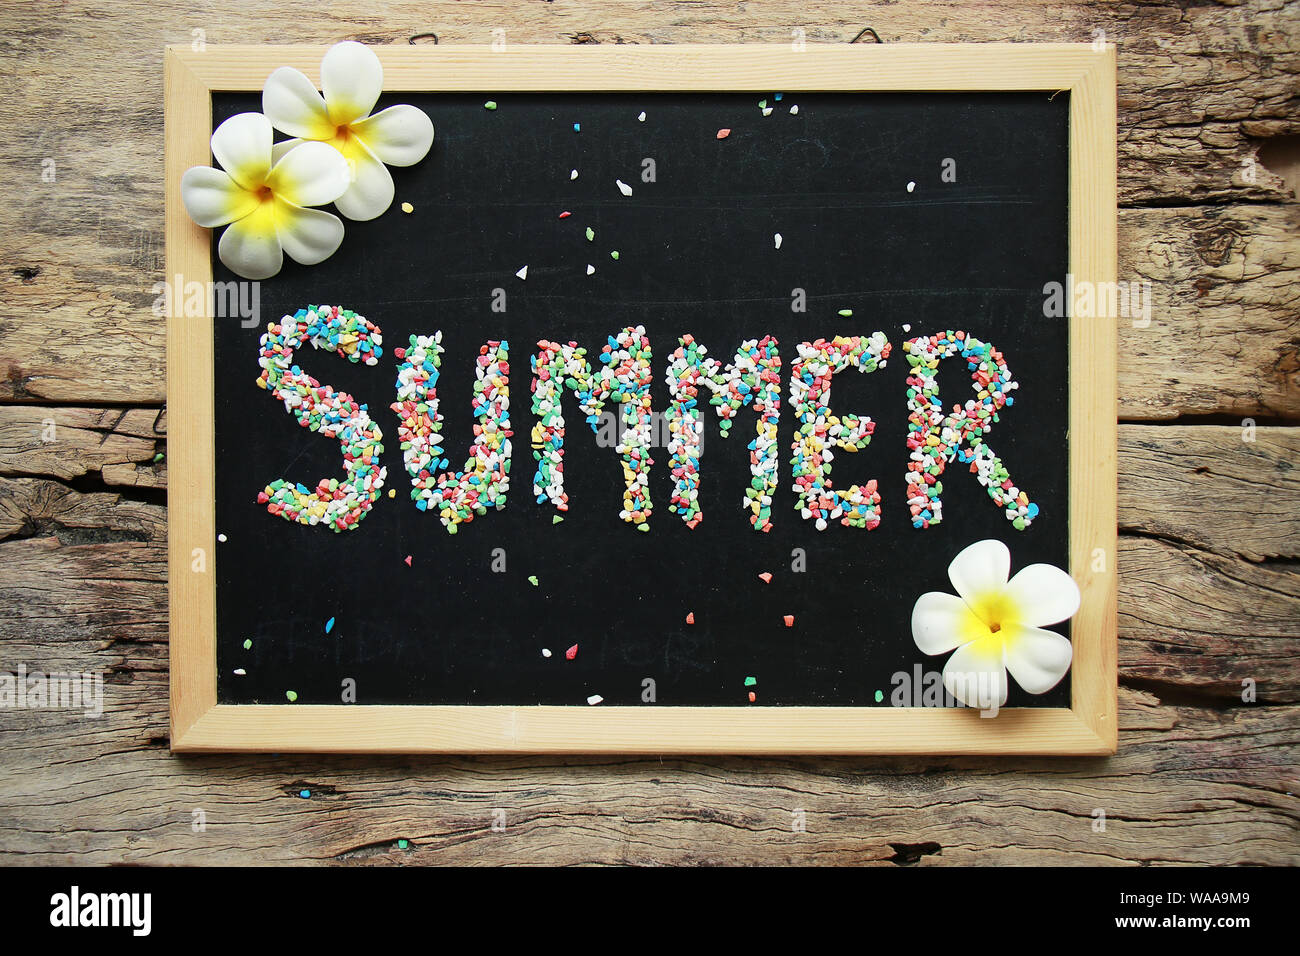 Verano palabra hecha coloridos grava sobre negro pizarra decorar con flores tropicales fondo de madera Fotografía de stock - Alamy